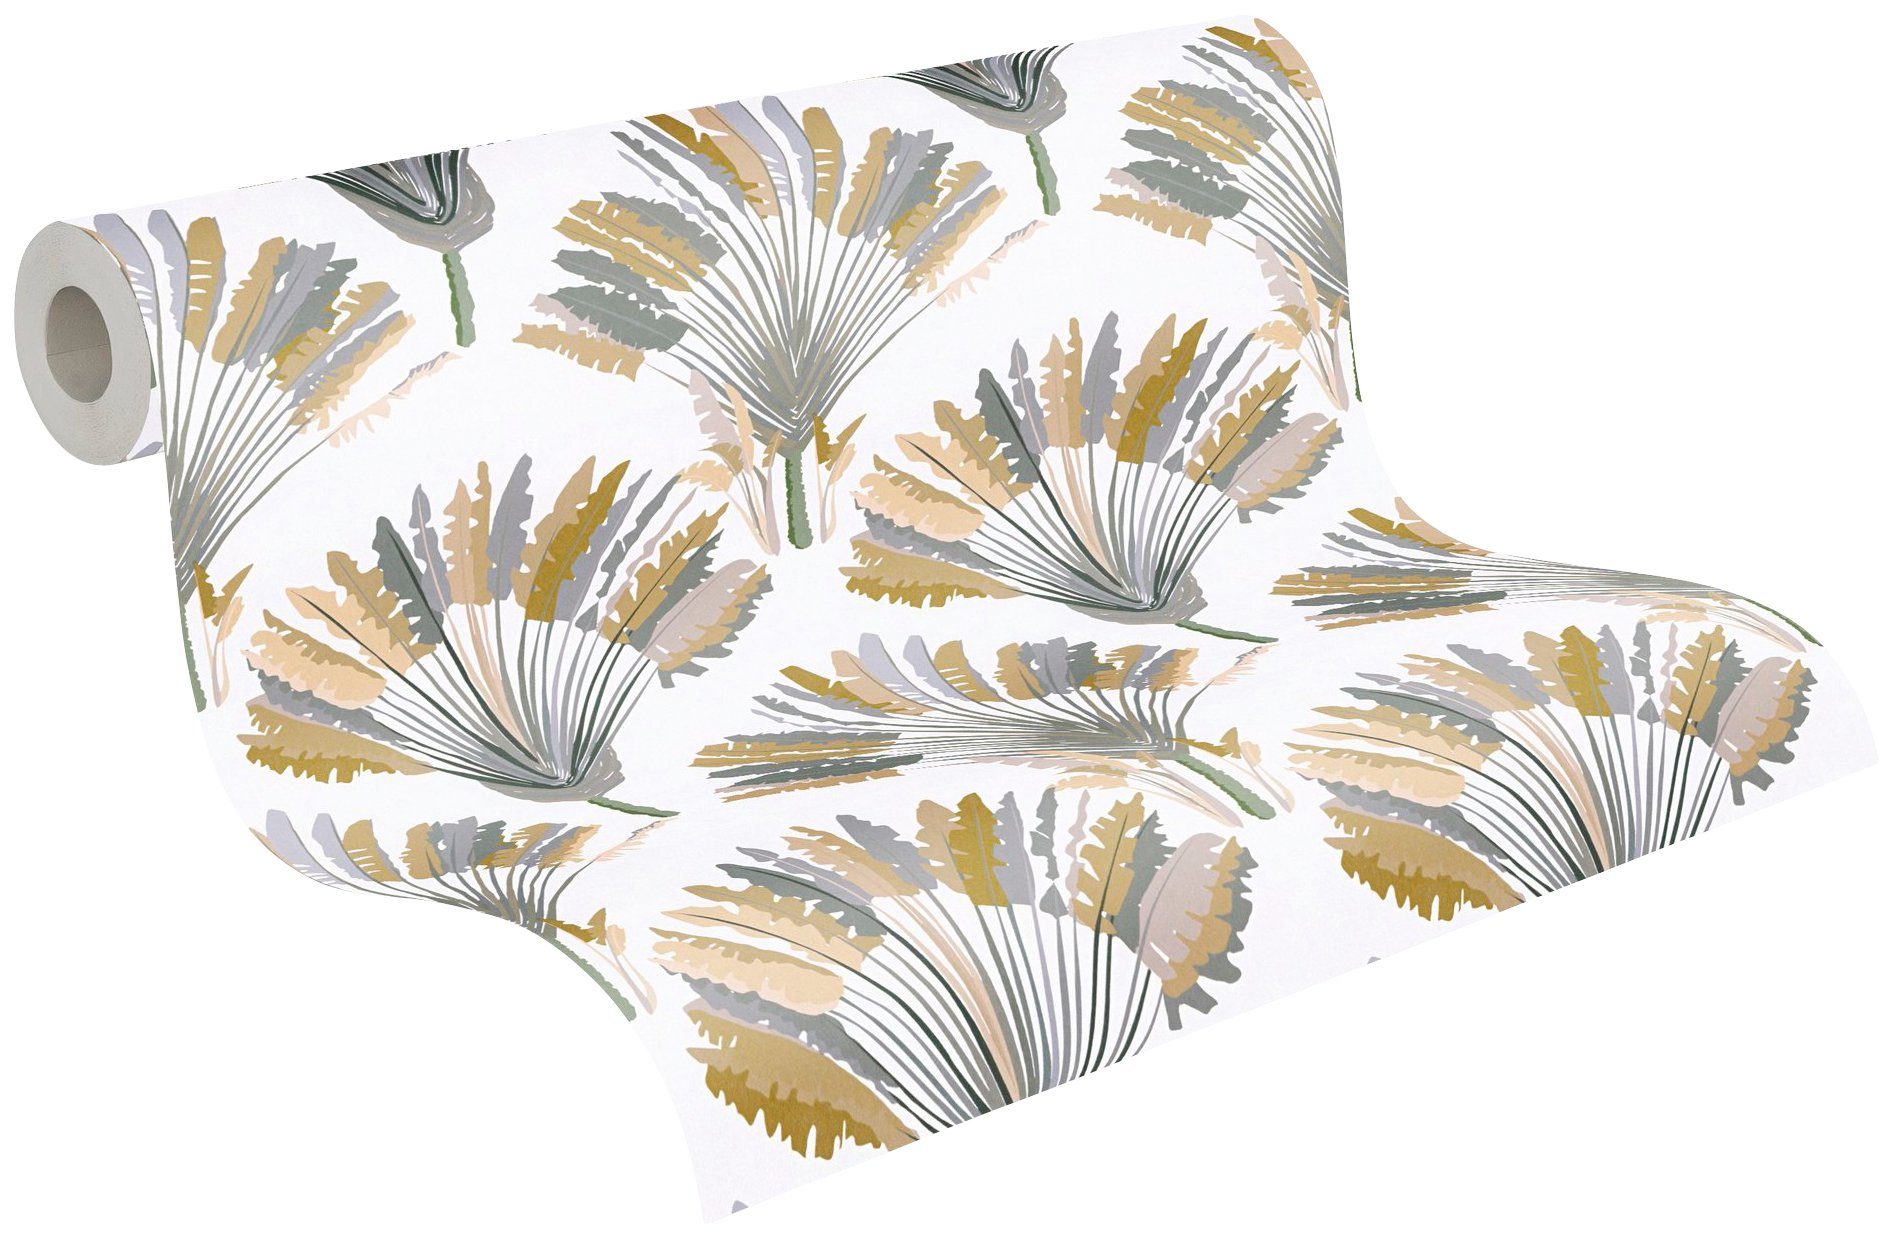 Dschungel Paper Architects Palmentapete Chic, A.S. Tapete gelb/grau/weiß Federn botanisch, Création floral, tropisch, glatt, Jungle Vliestapete